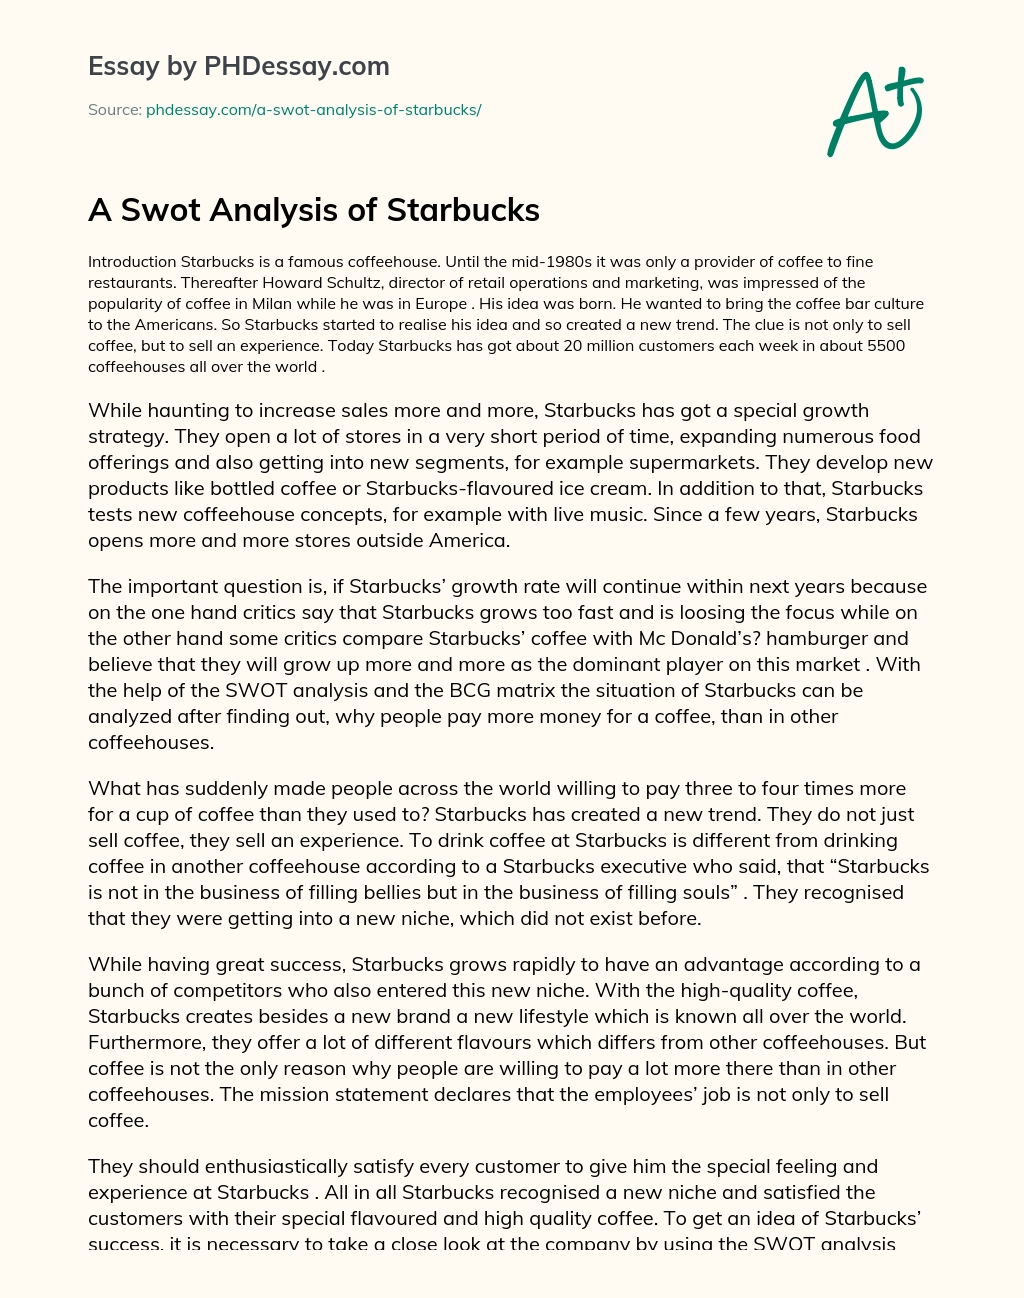 A Swot Analysis of Starbucks essay